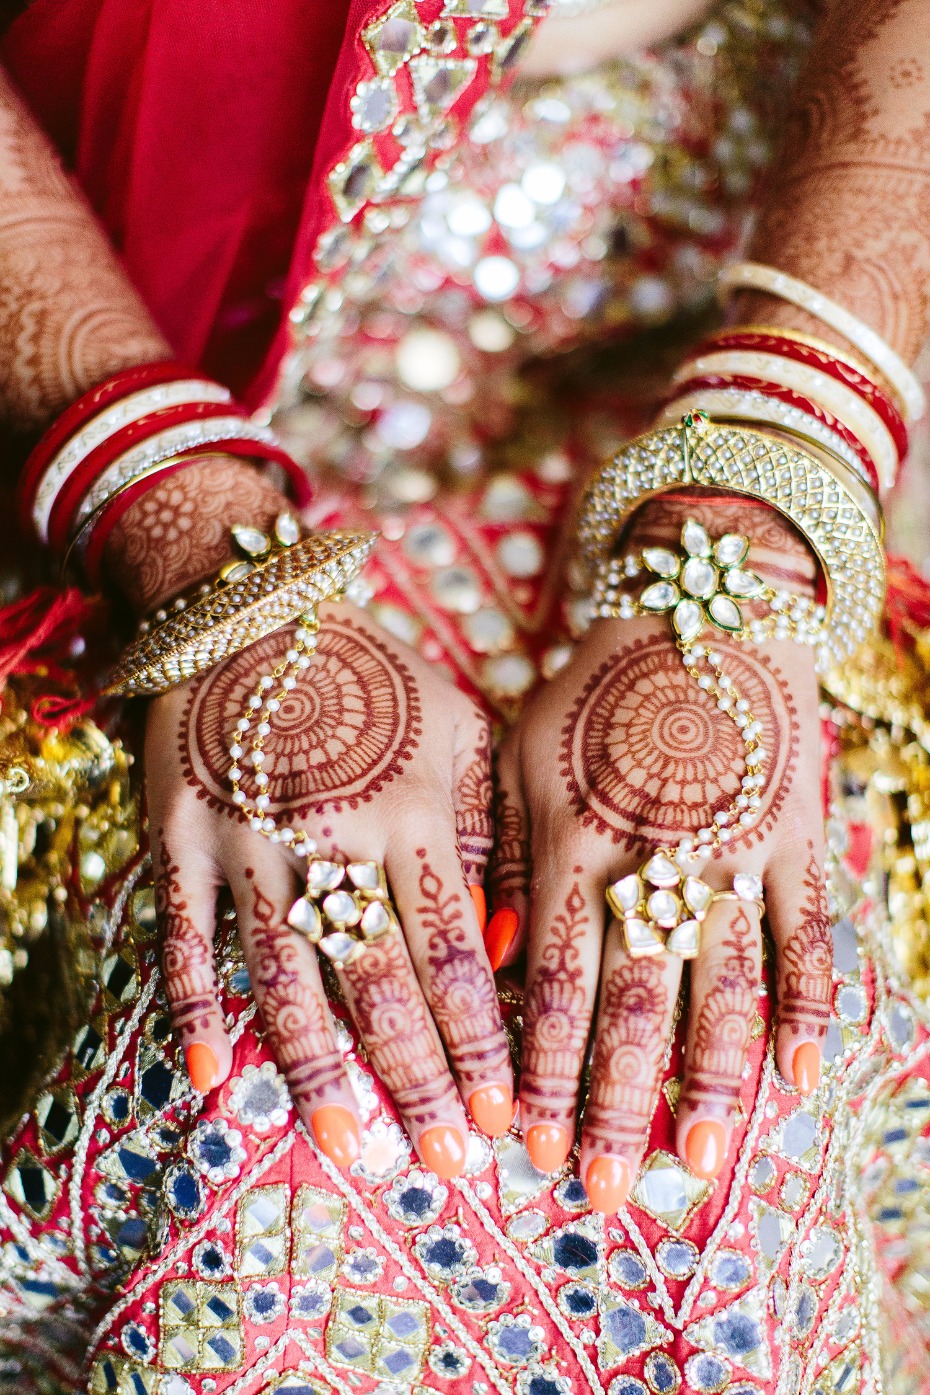 Stunning bridal jewelry and henna